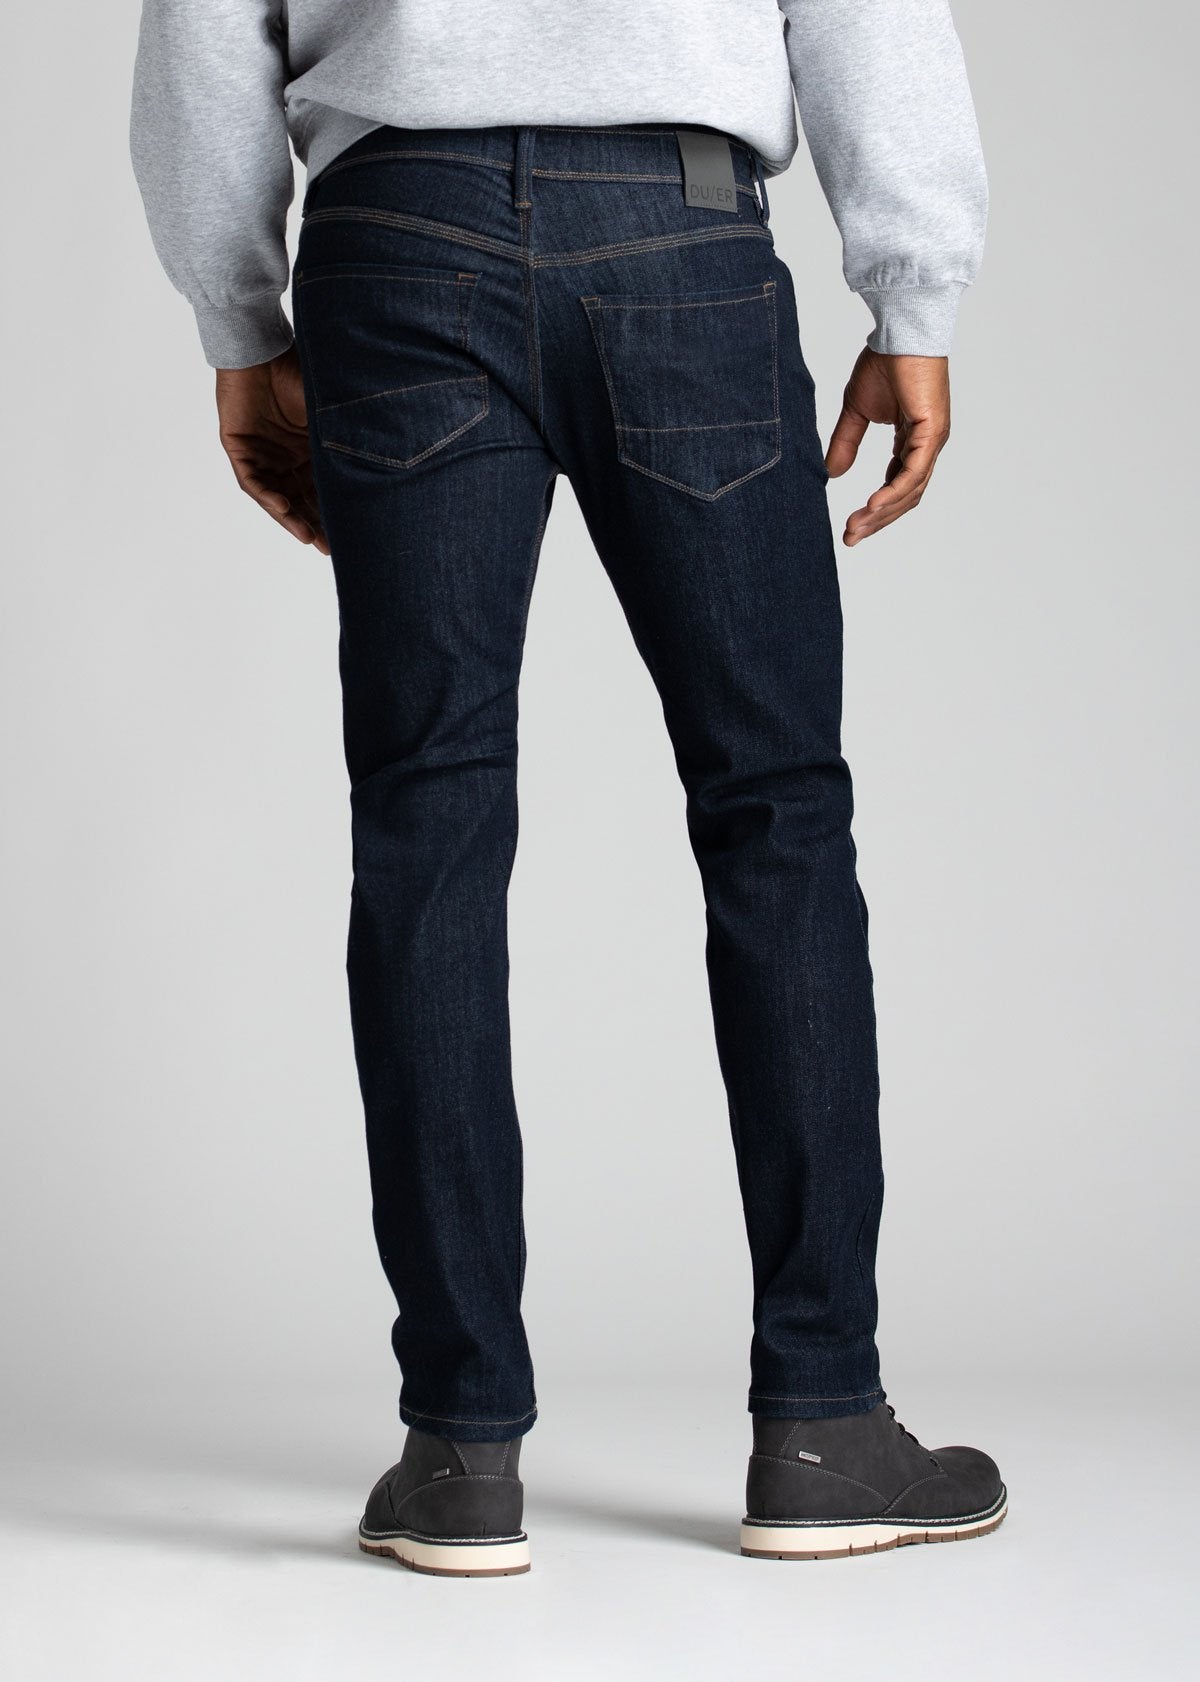 Mens slim fit blue water resistant stretch jeans back